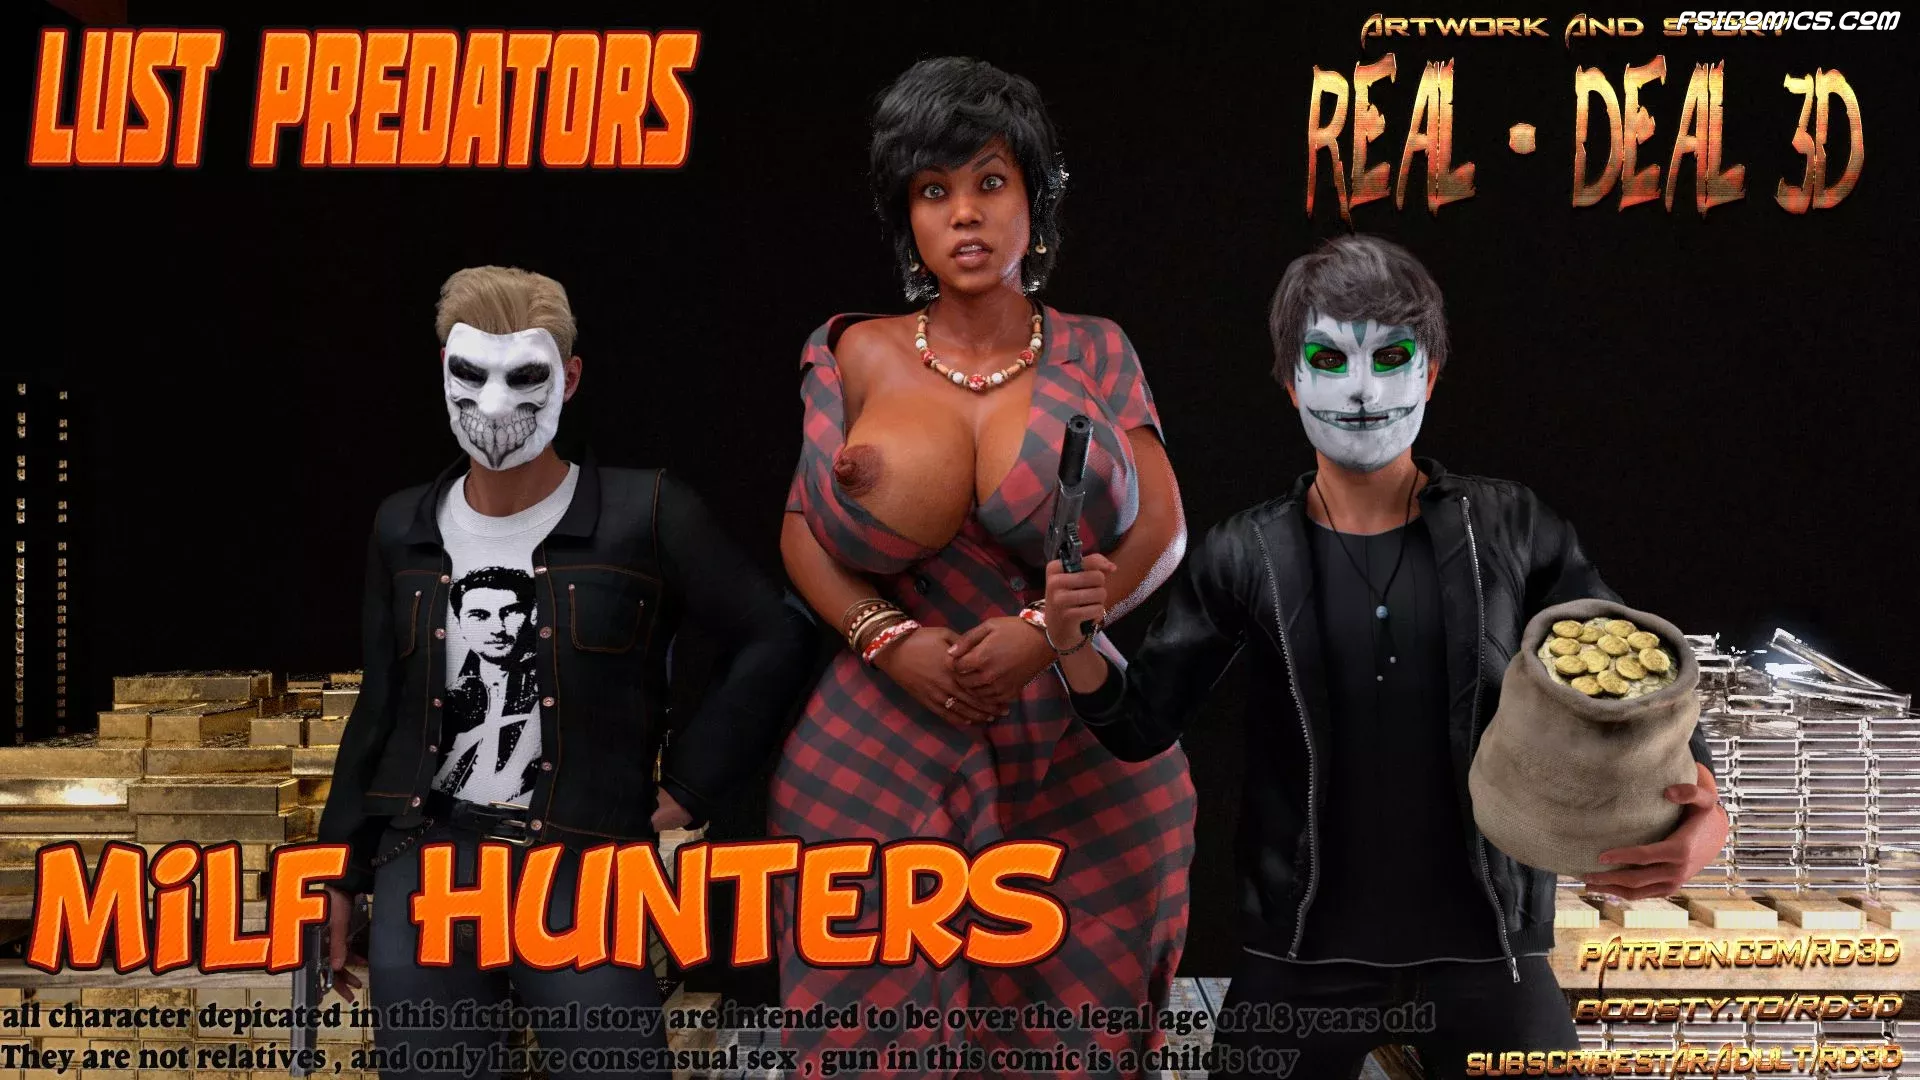 MILF Hunters Chapter 1 - Real Deal 3D - 23 - FSIComics